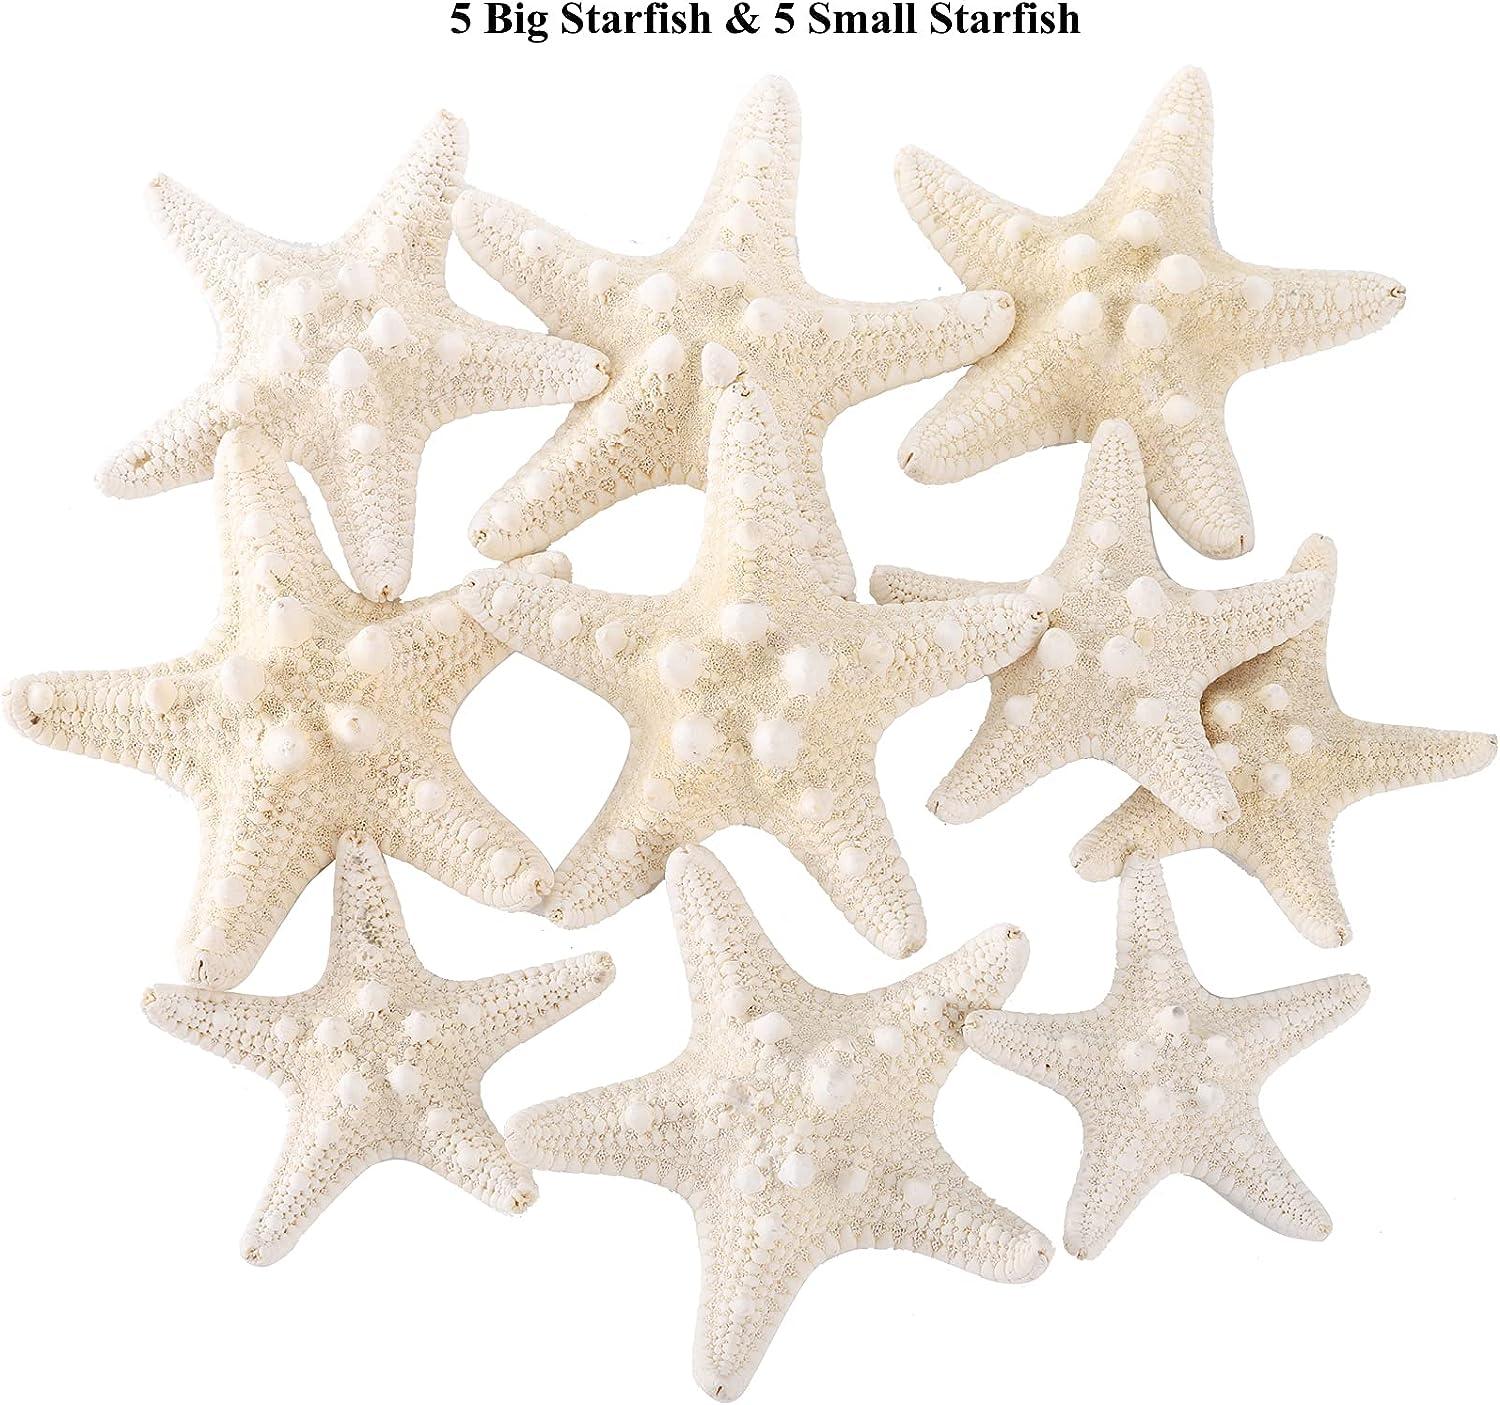 Jangostor 20 Pcs 2-6 inch Starfish Mixed Ocean Beach Starfish-Natural Colorful Seashells Starfish Perfect for Wedding Decor Beach Theme Party, Home